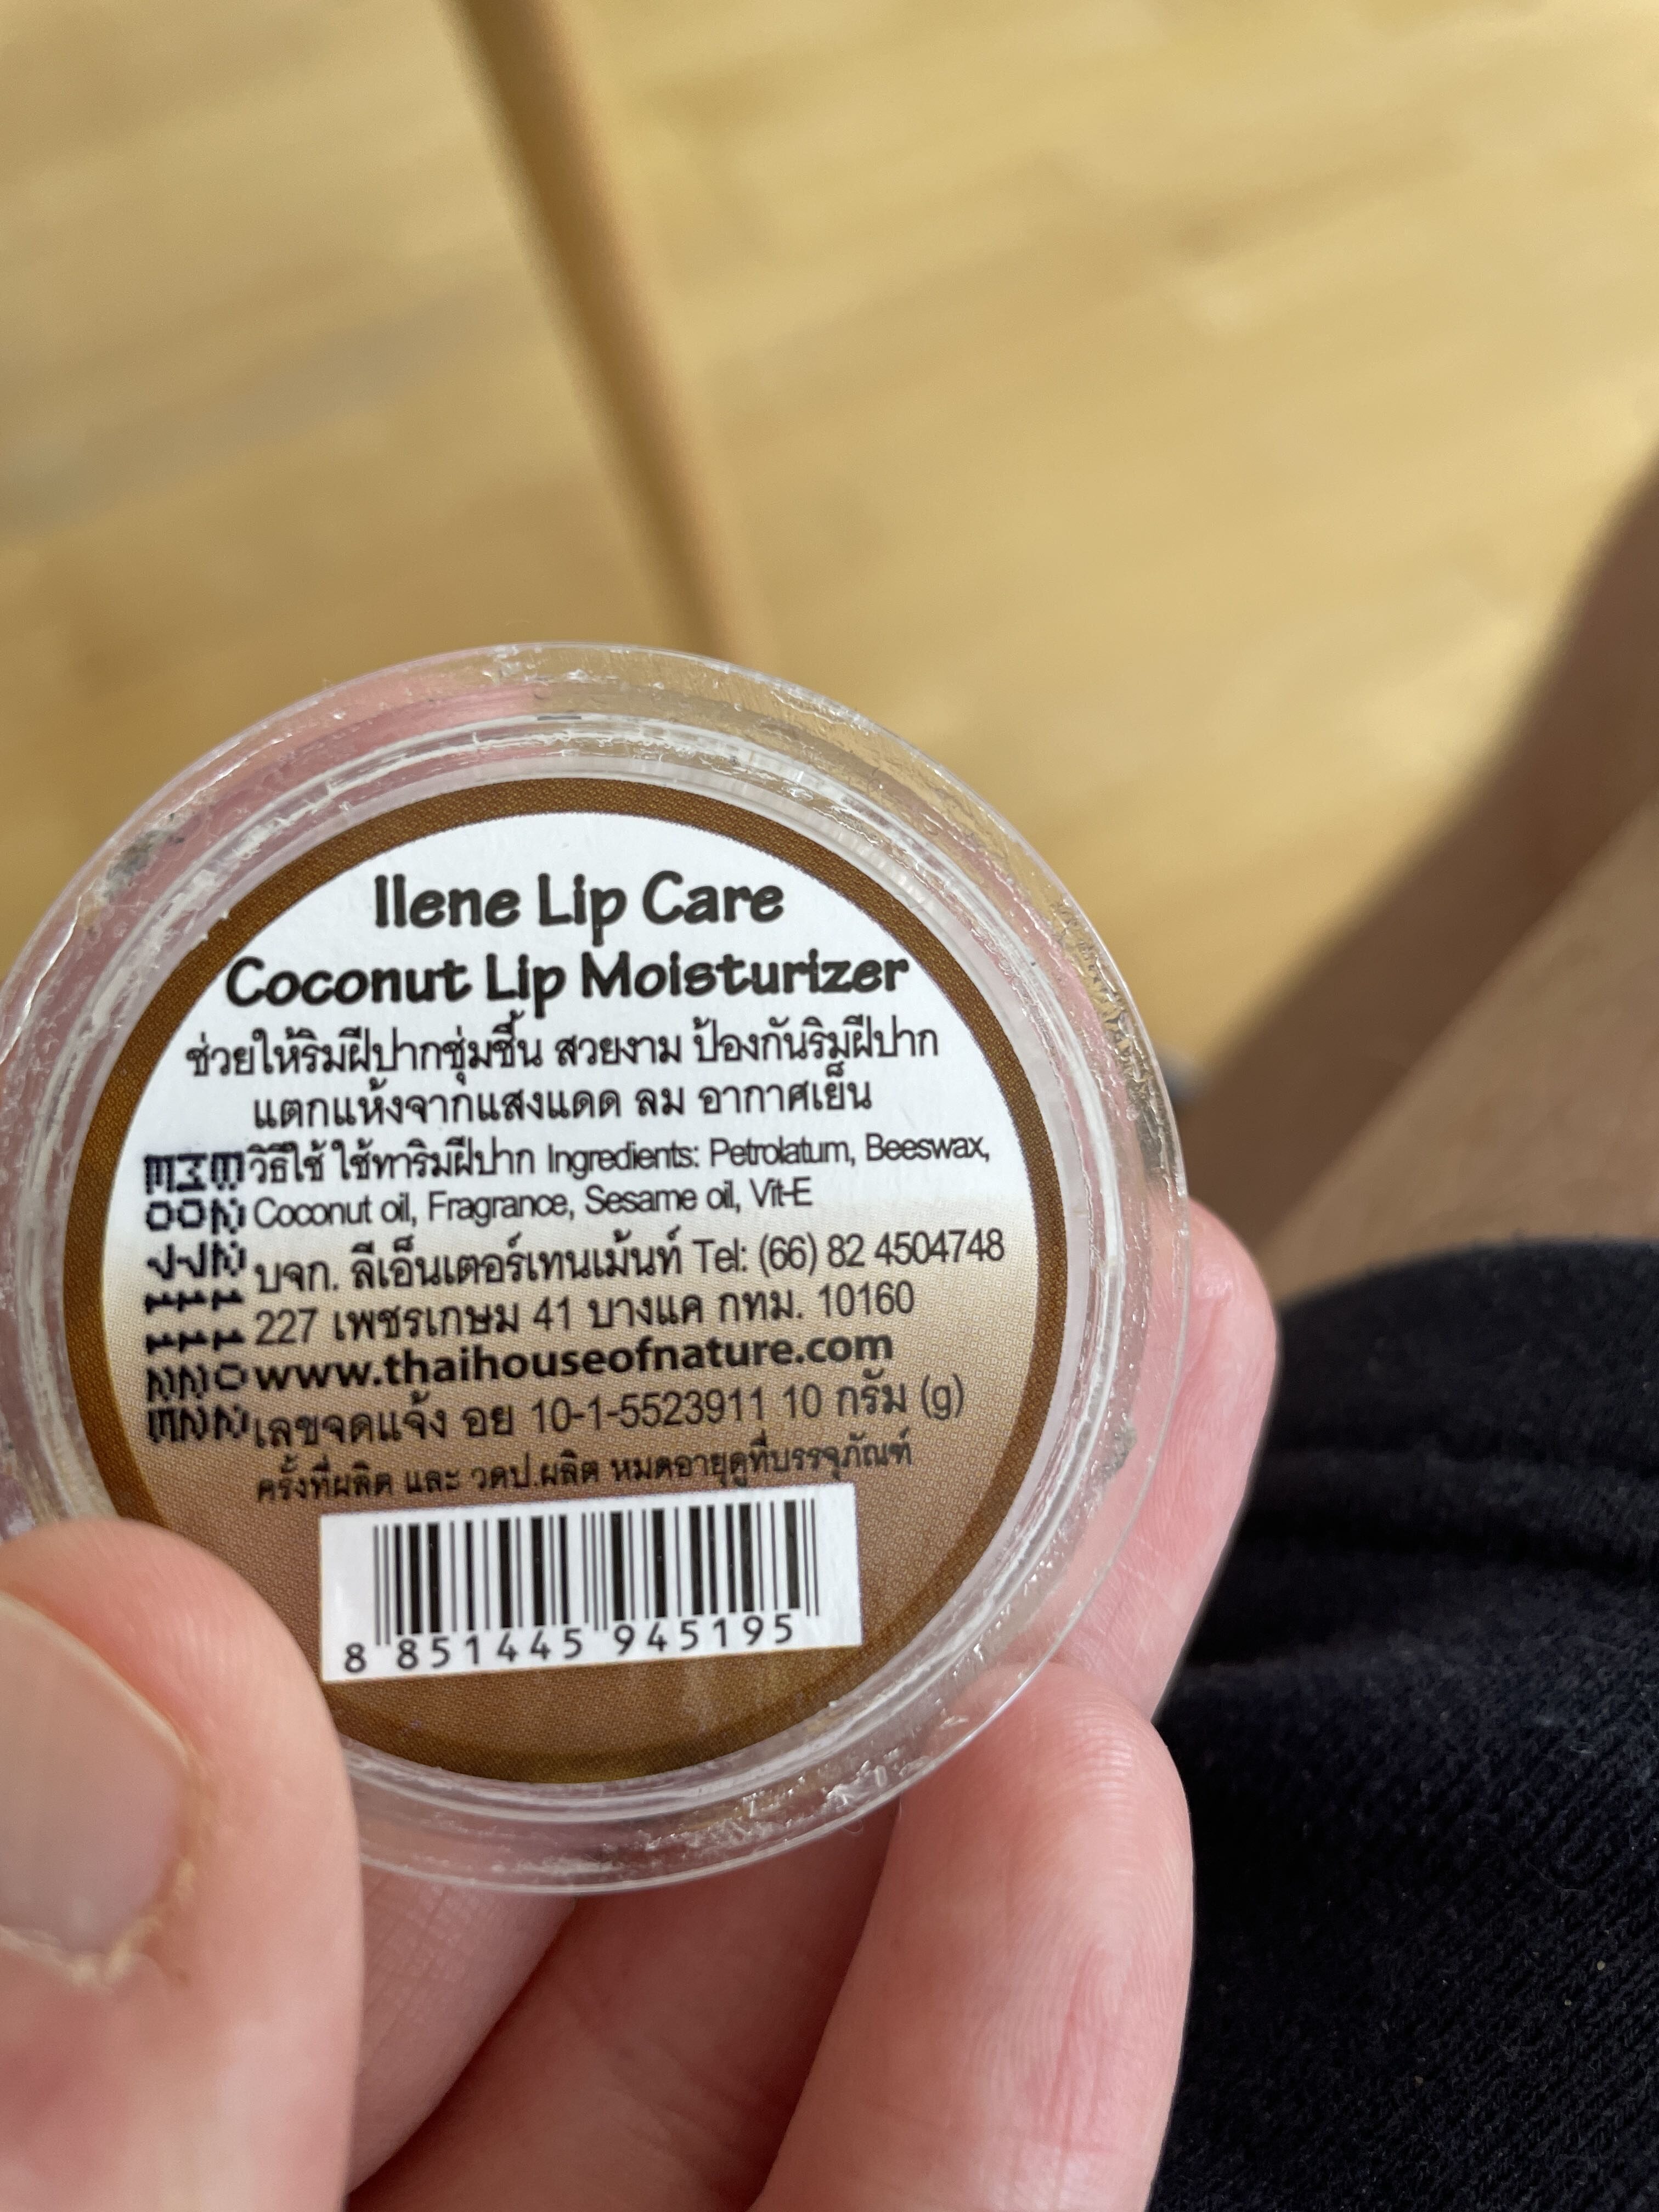 Coconut Lip Moisturizer - Produkt - en